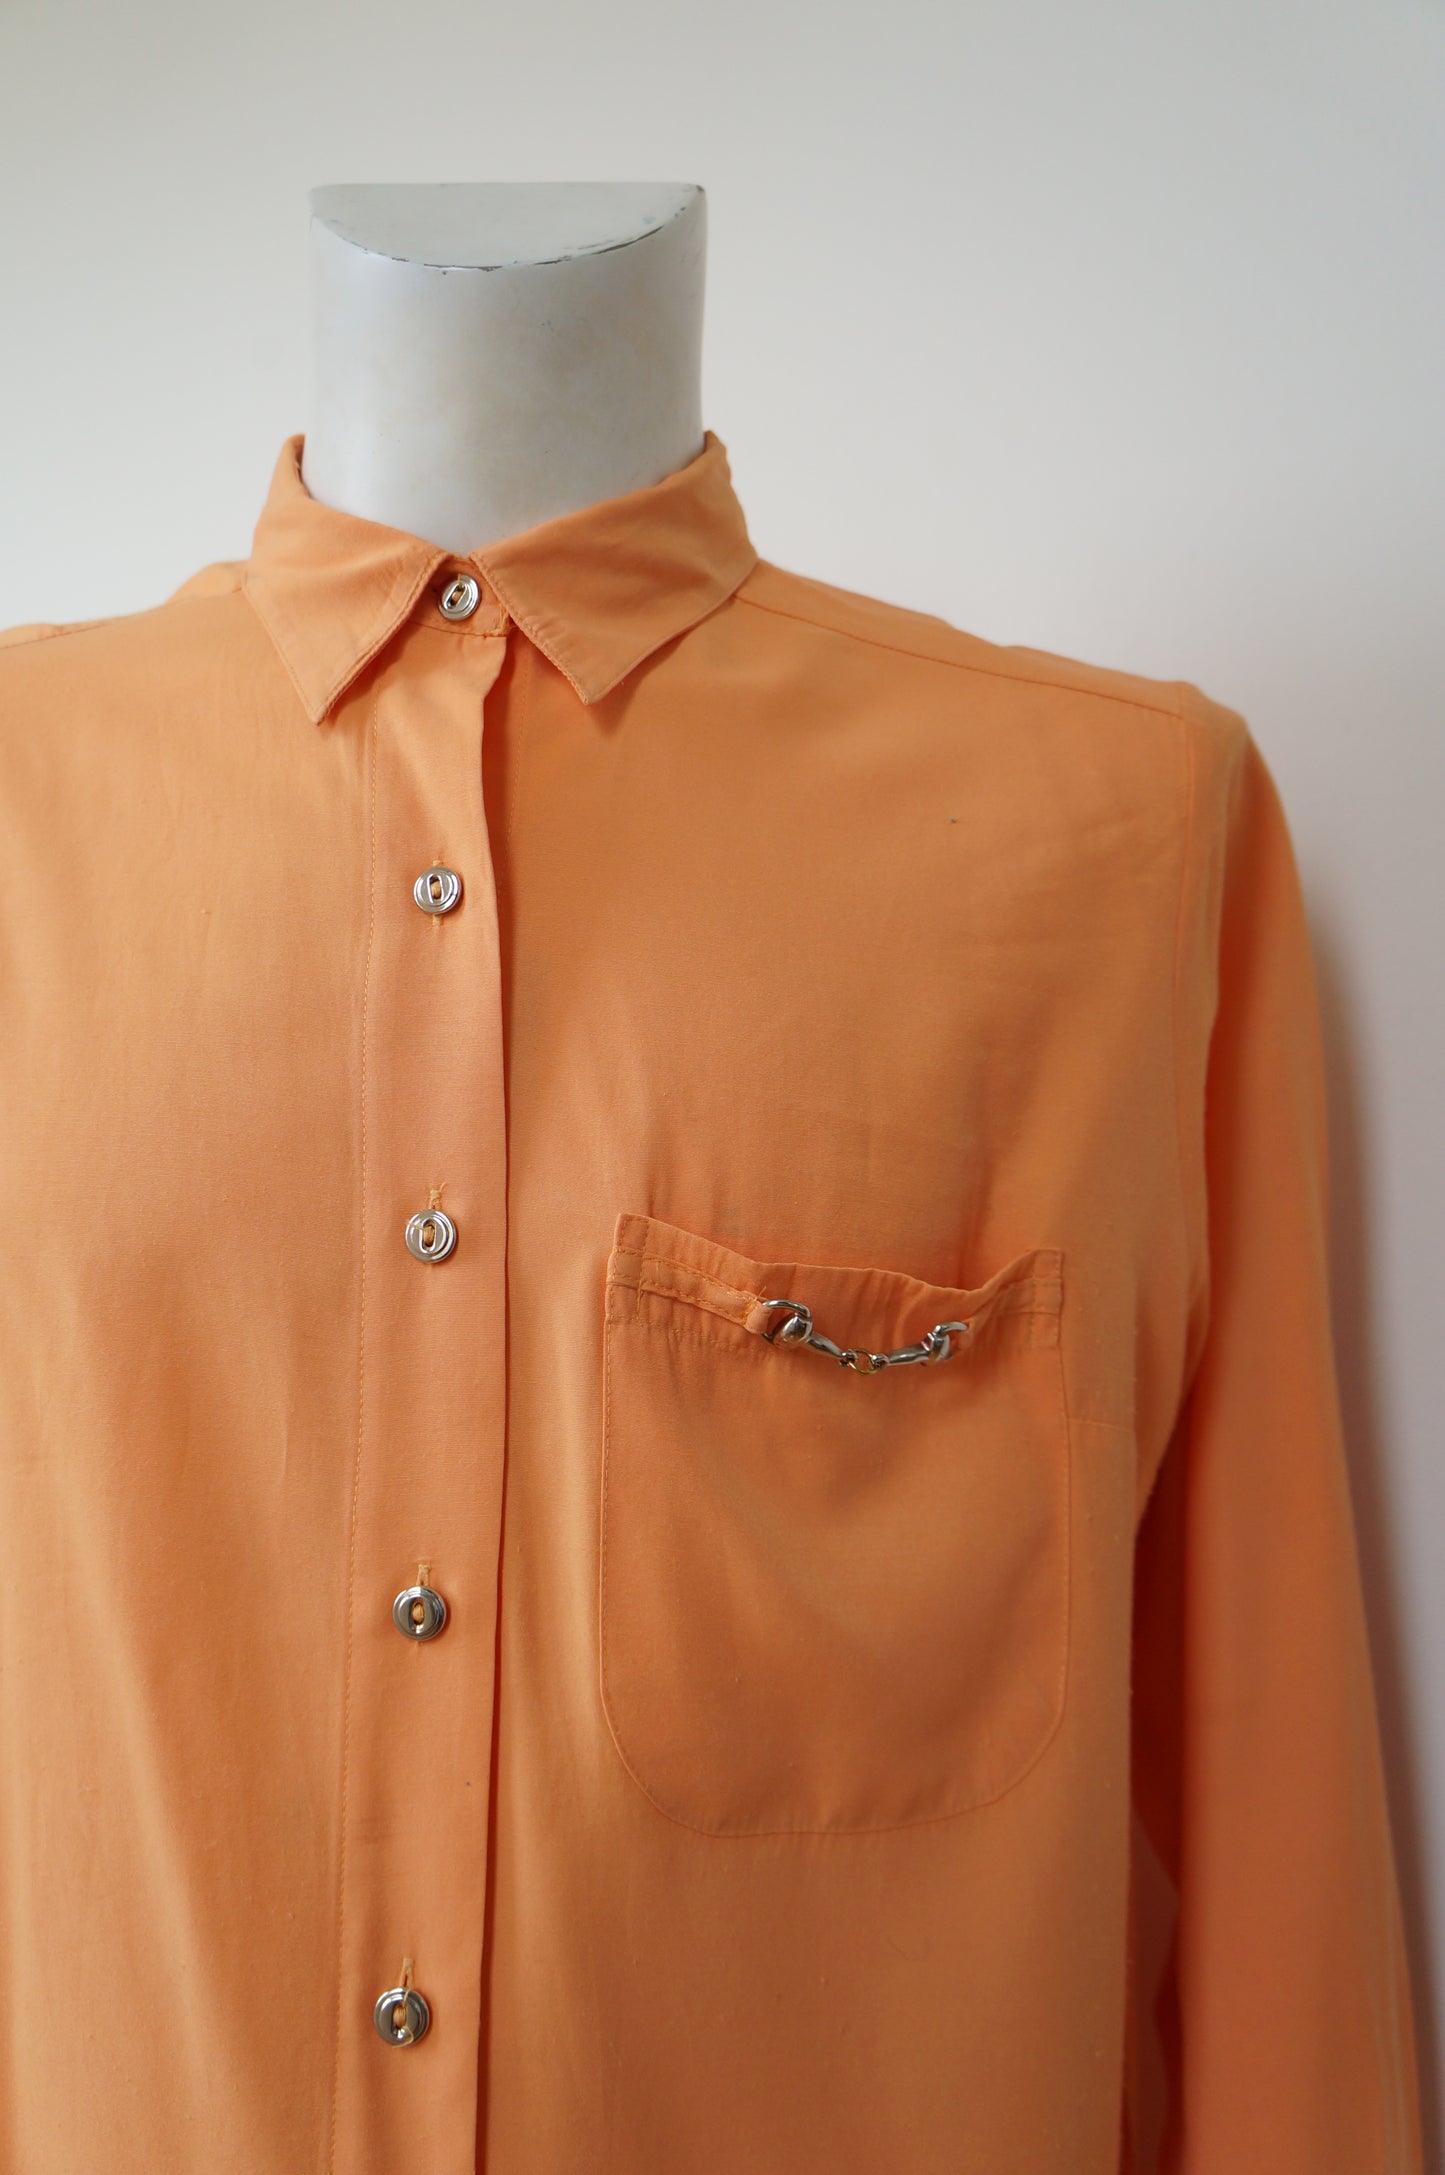 Orange latch shirt